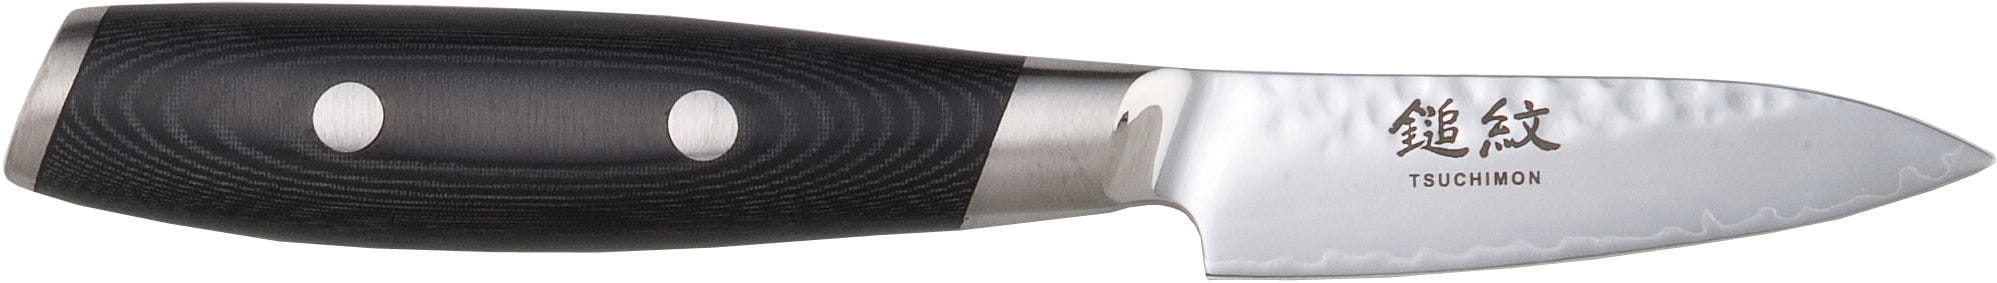 Yaxell Tsuchimon skalande kniv, 8 cm